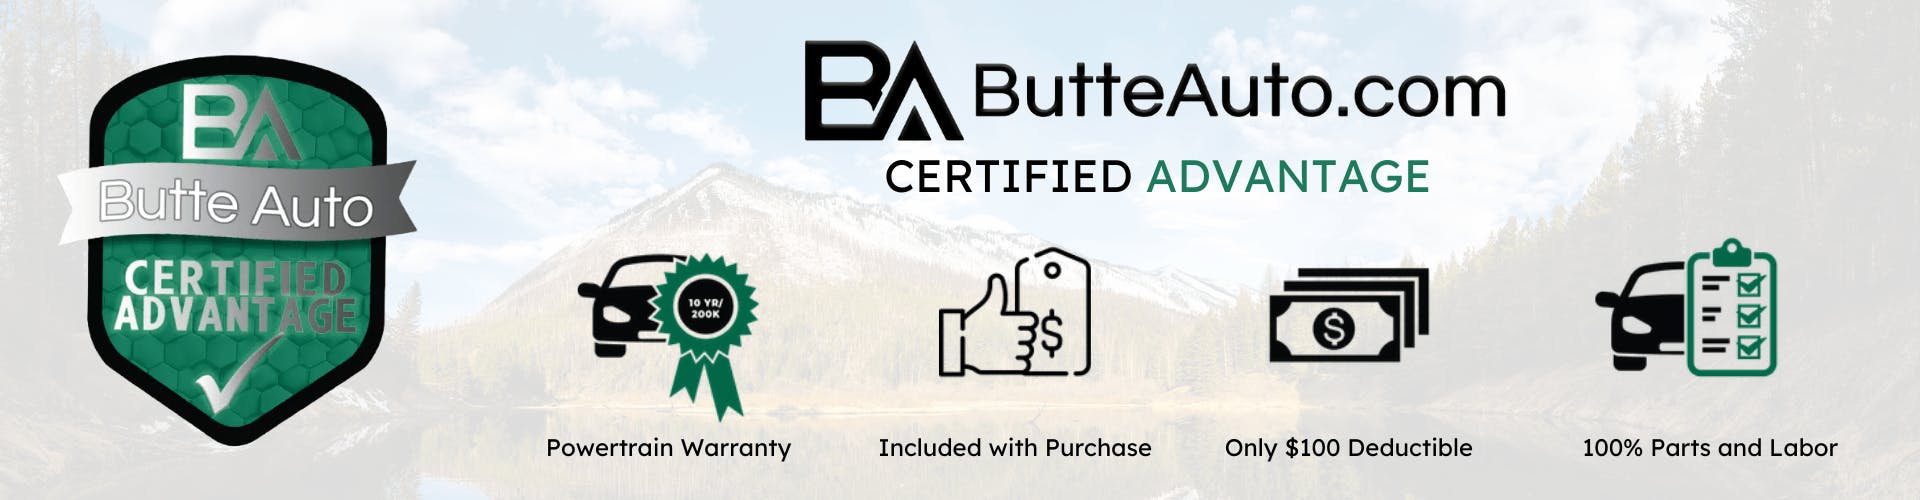 Butte Auto Certified Advantage